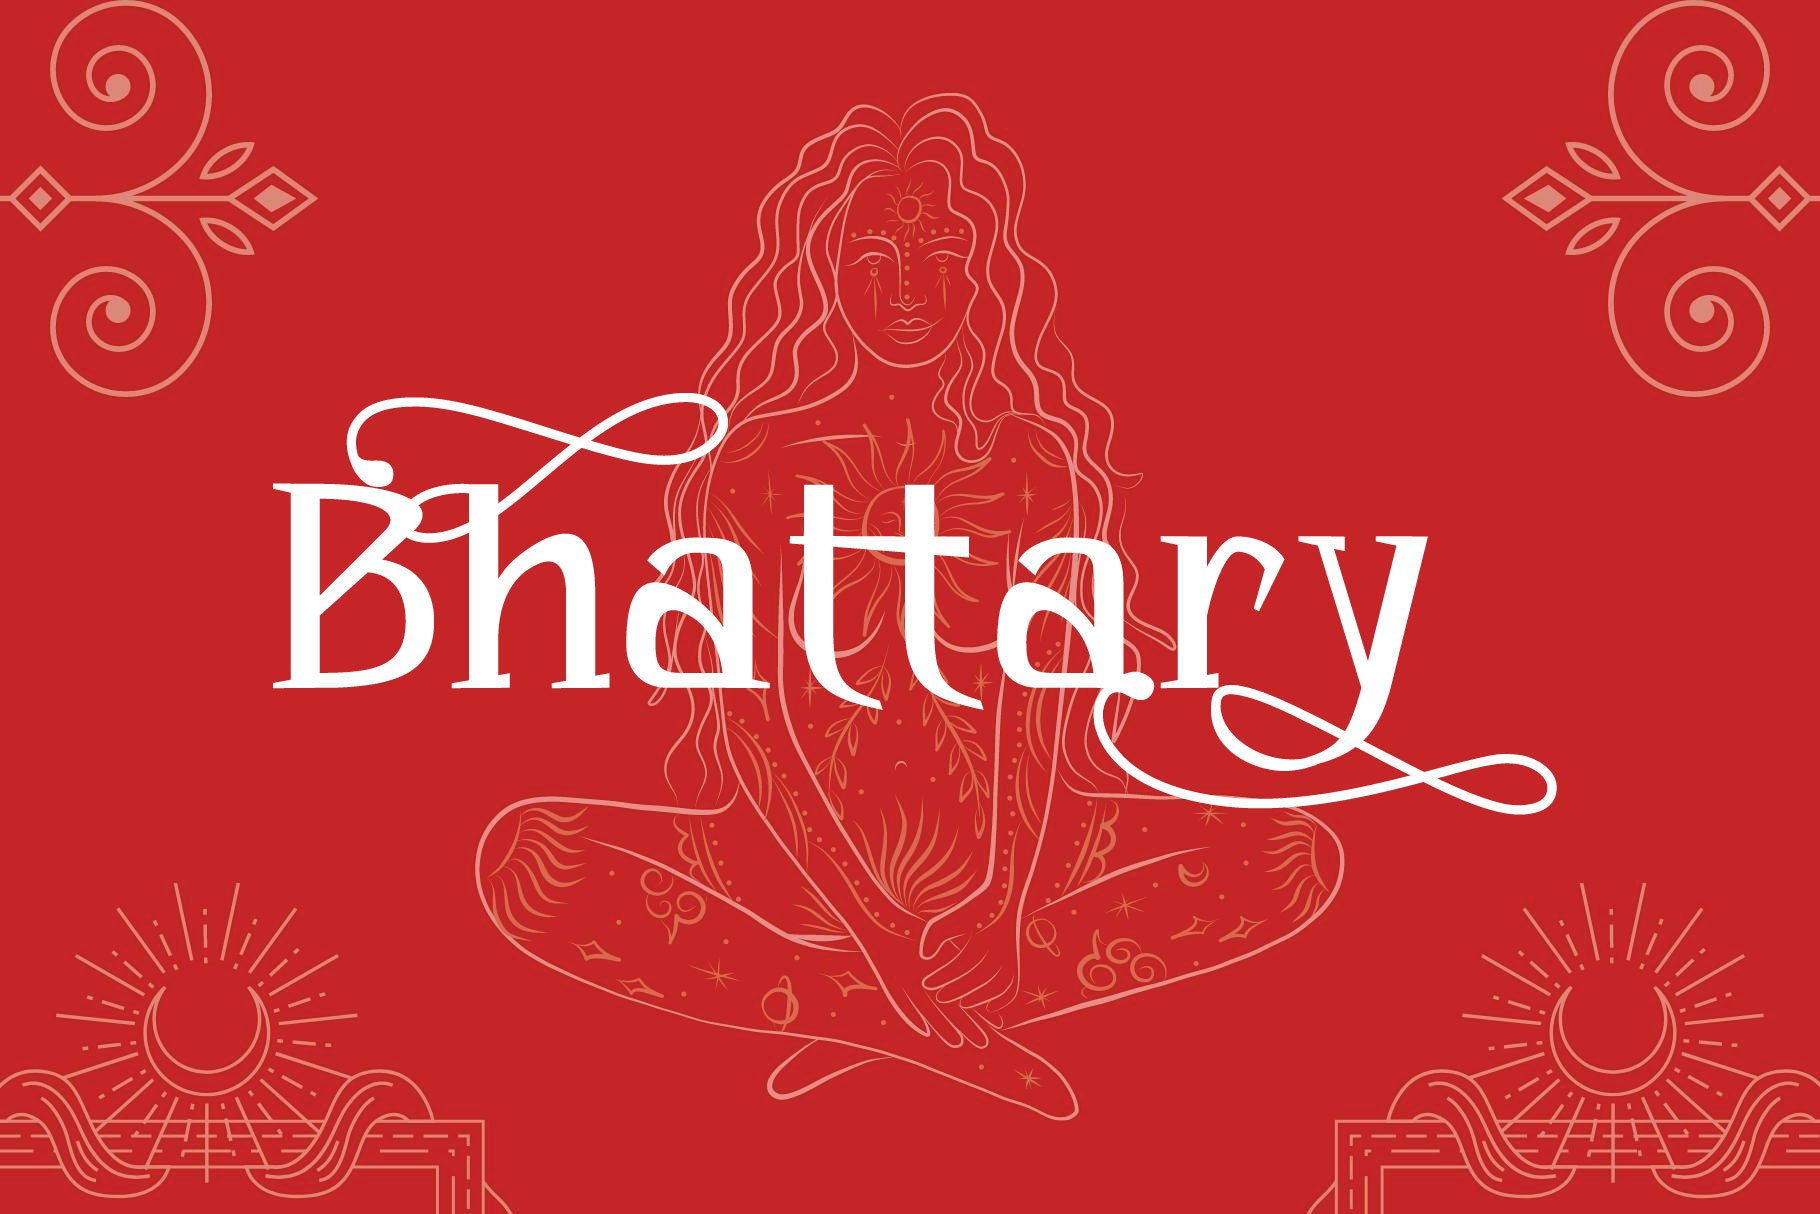 Bhattary - Retro Vintage Serif cover image.